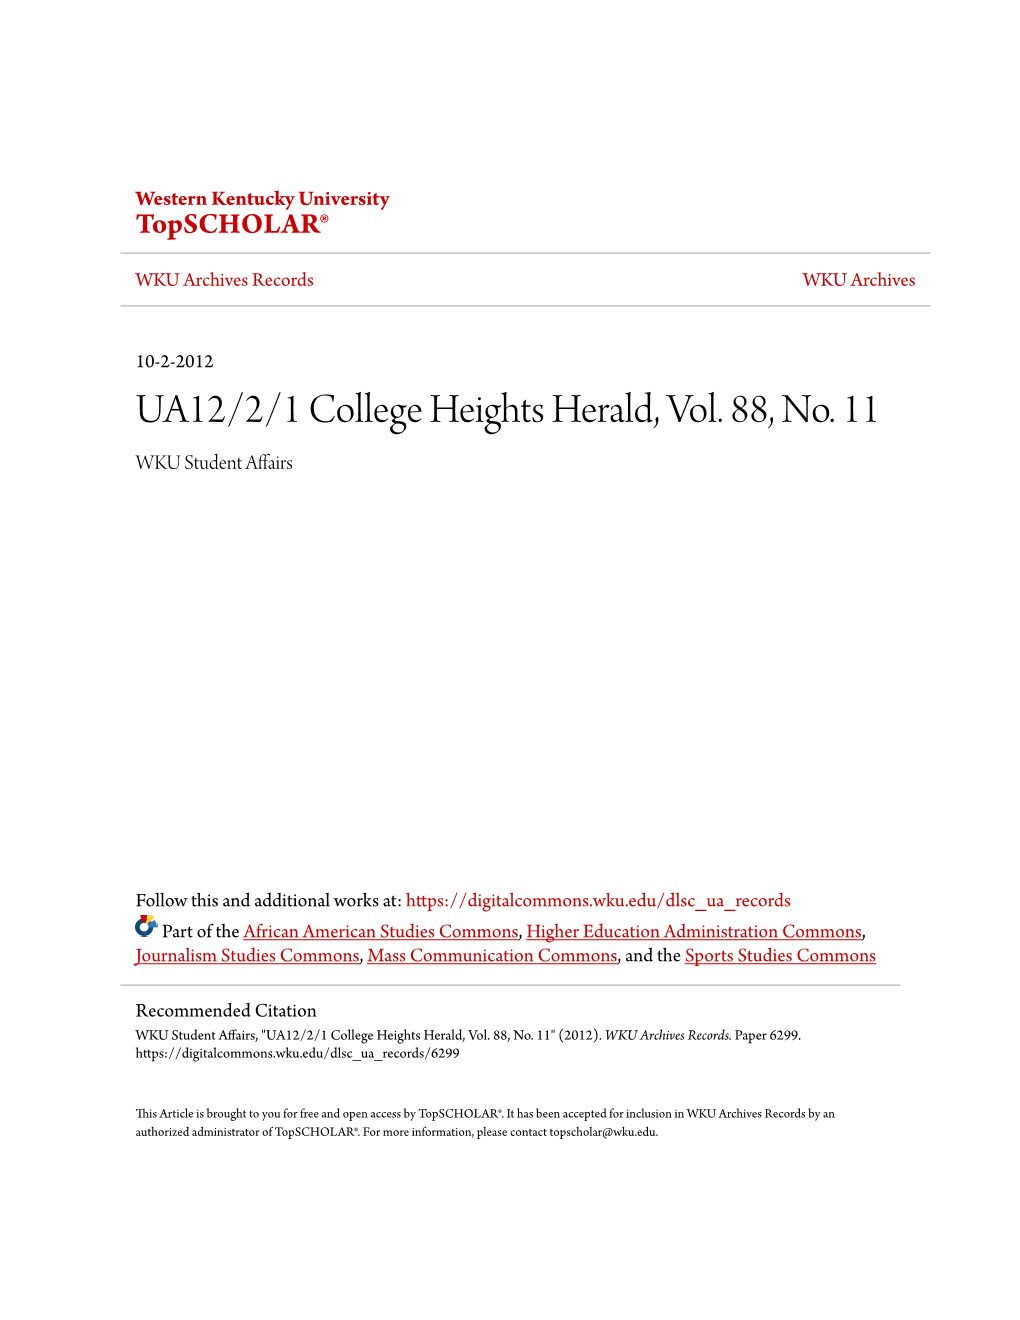 UA12/2/1 College Heights Herald, Vol. 88, No. 11 WKU Student Affairs